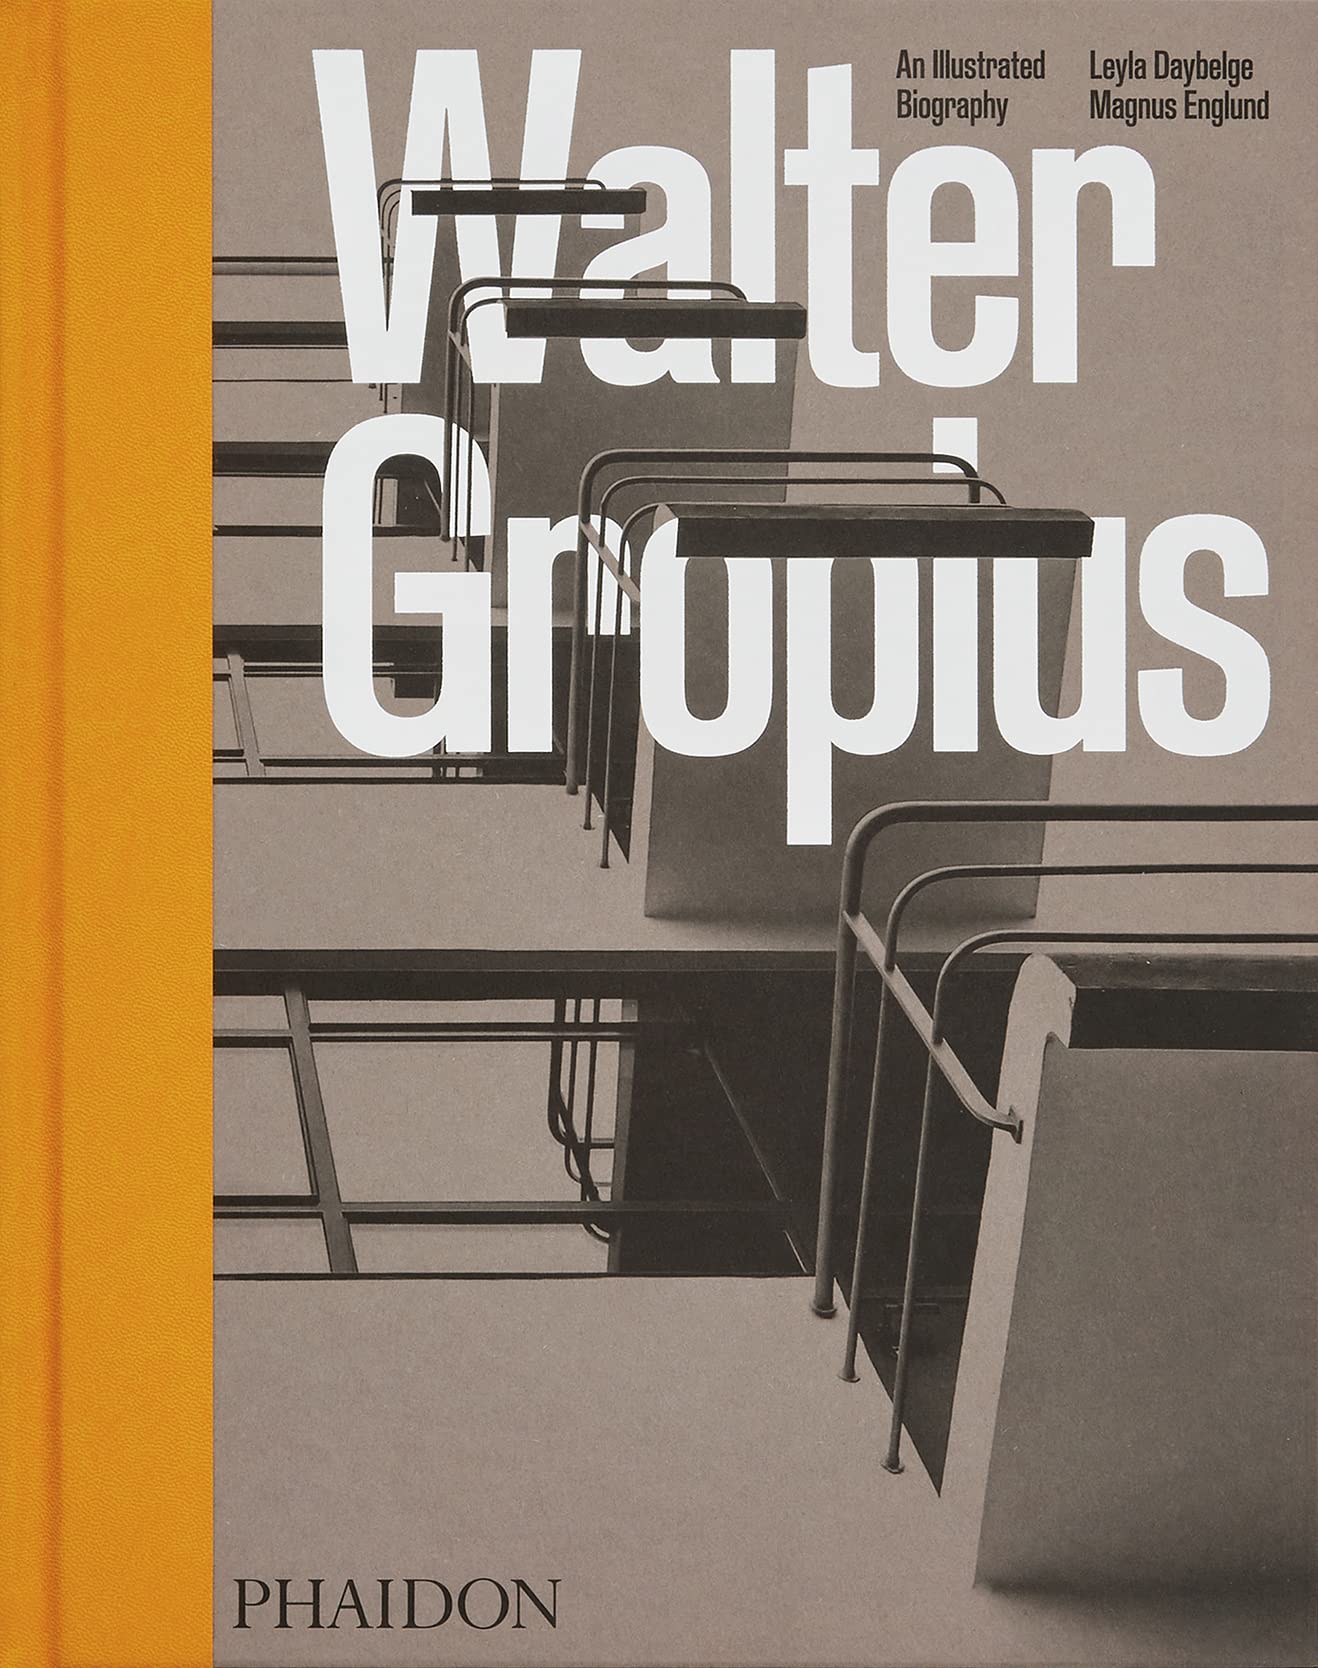  - Walter Gropius: An Illustrated Biography